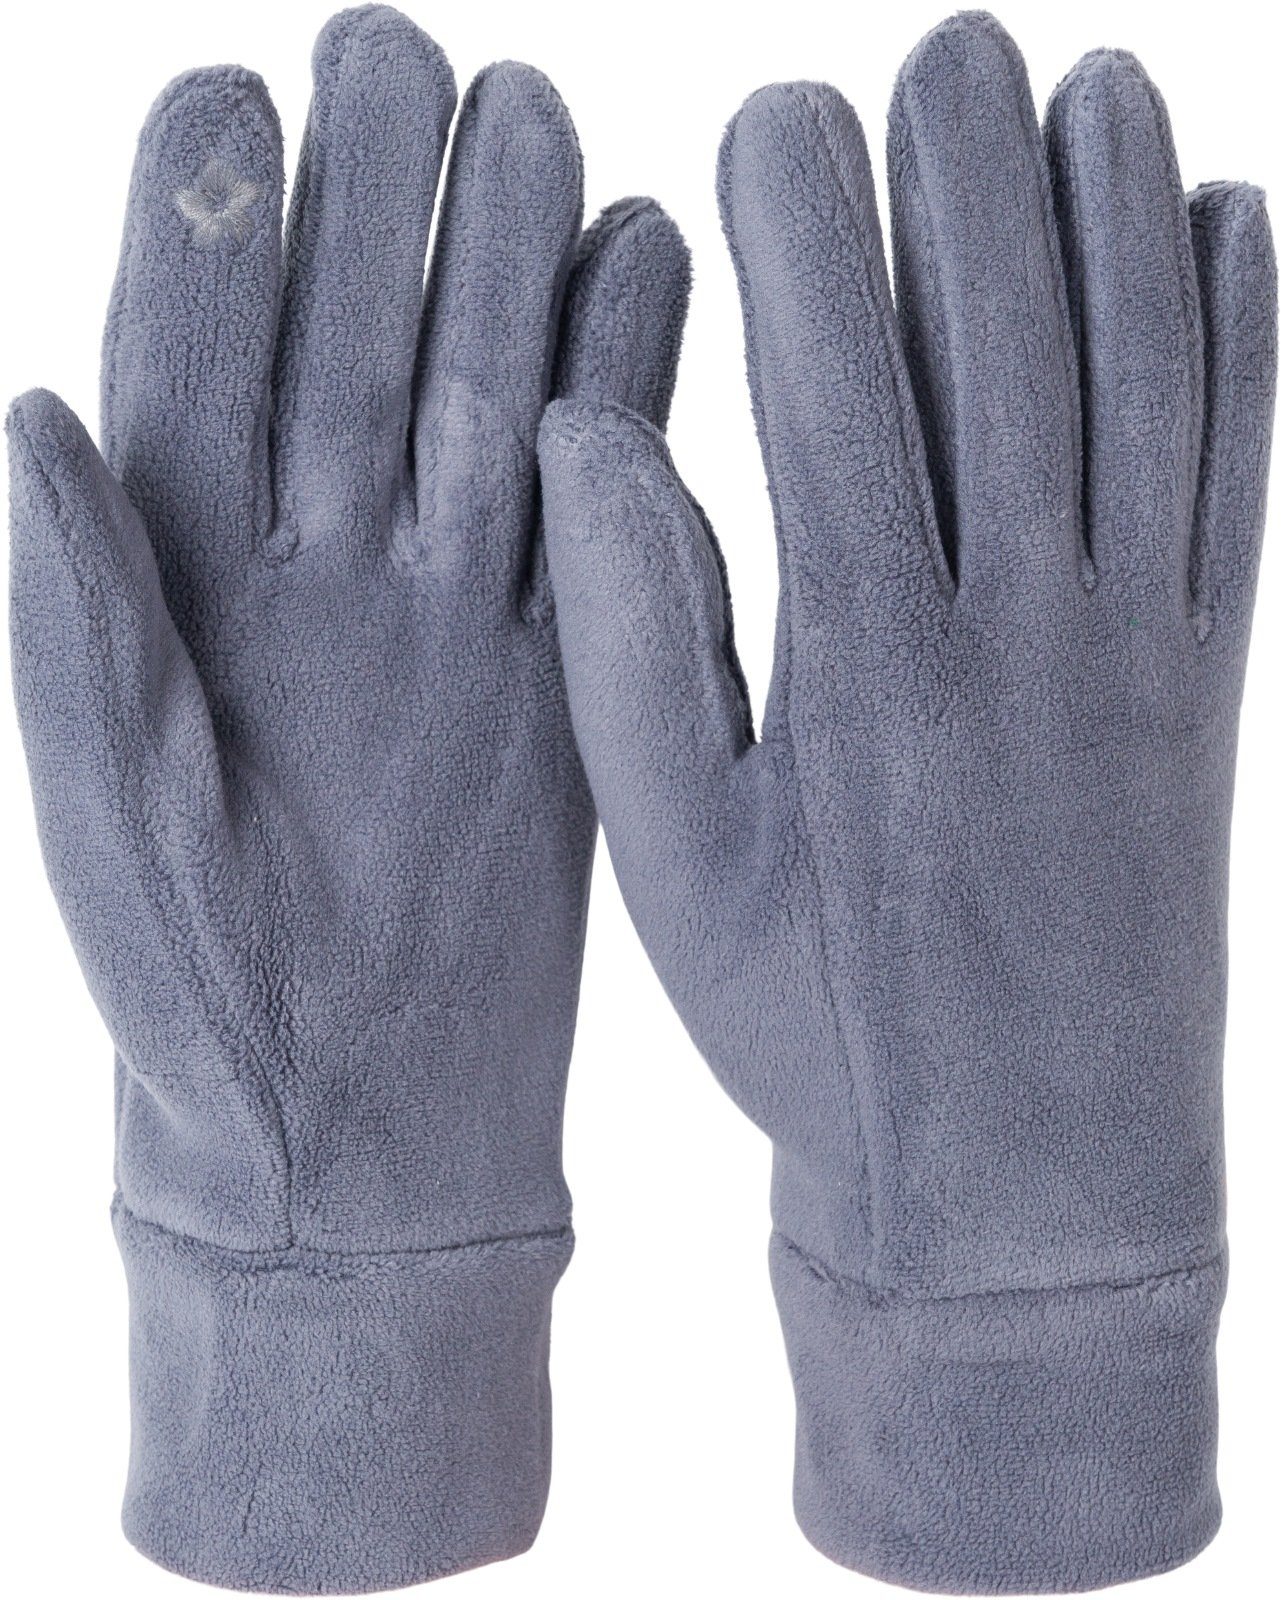 styleBREAKER Fleecehandschuhe Einfarbige Touchscreen Fleece Handschuhe Dunkelgrau